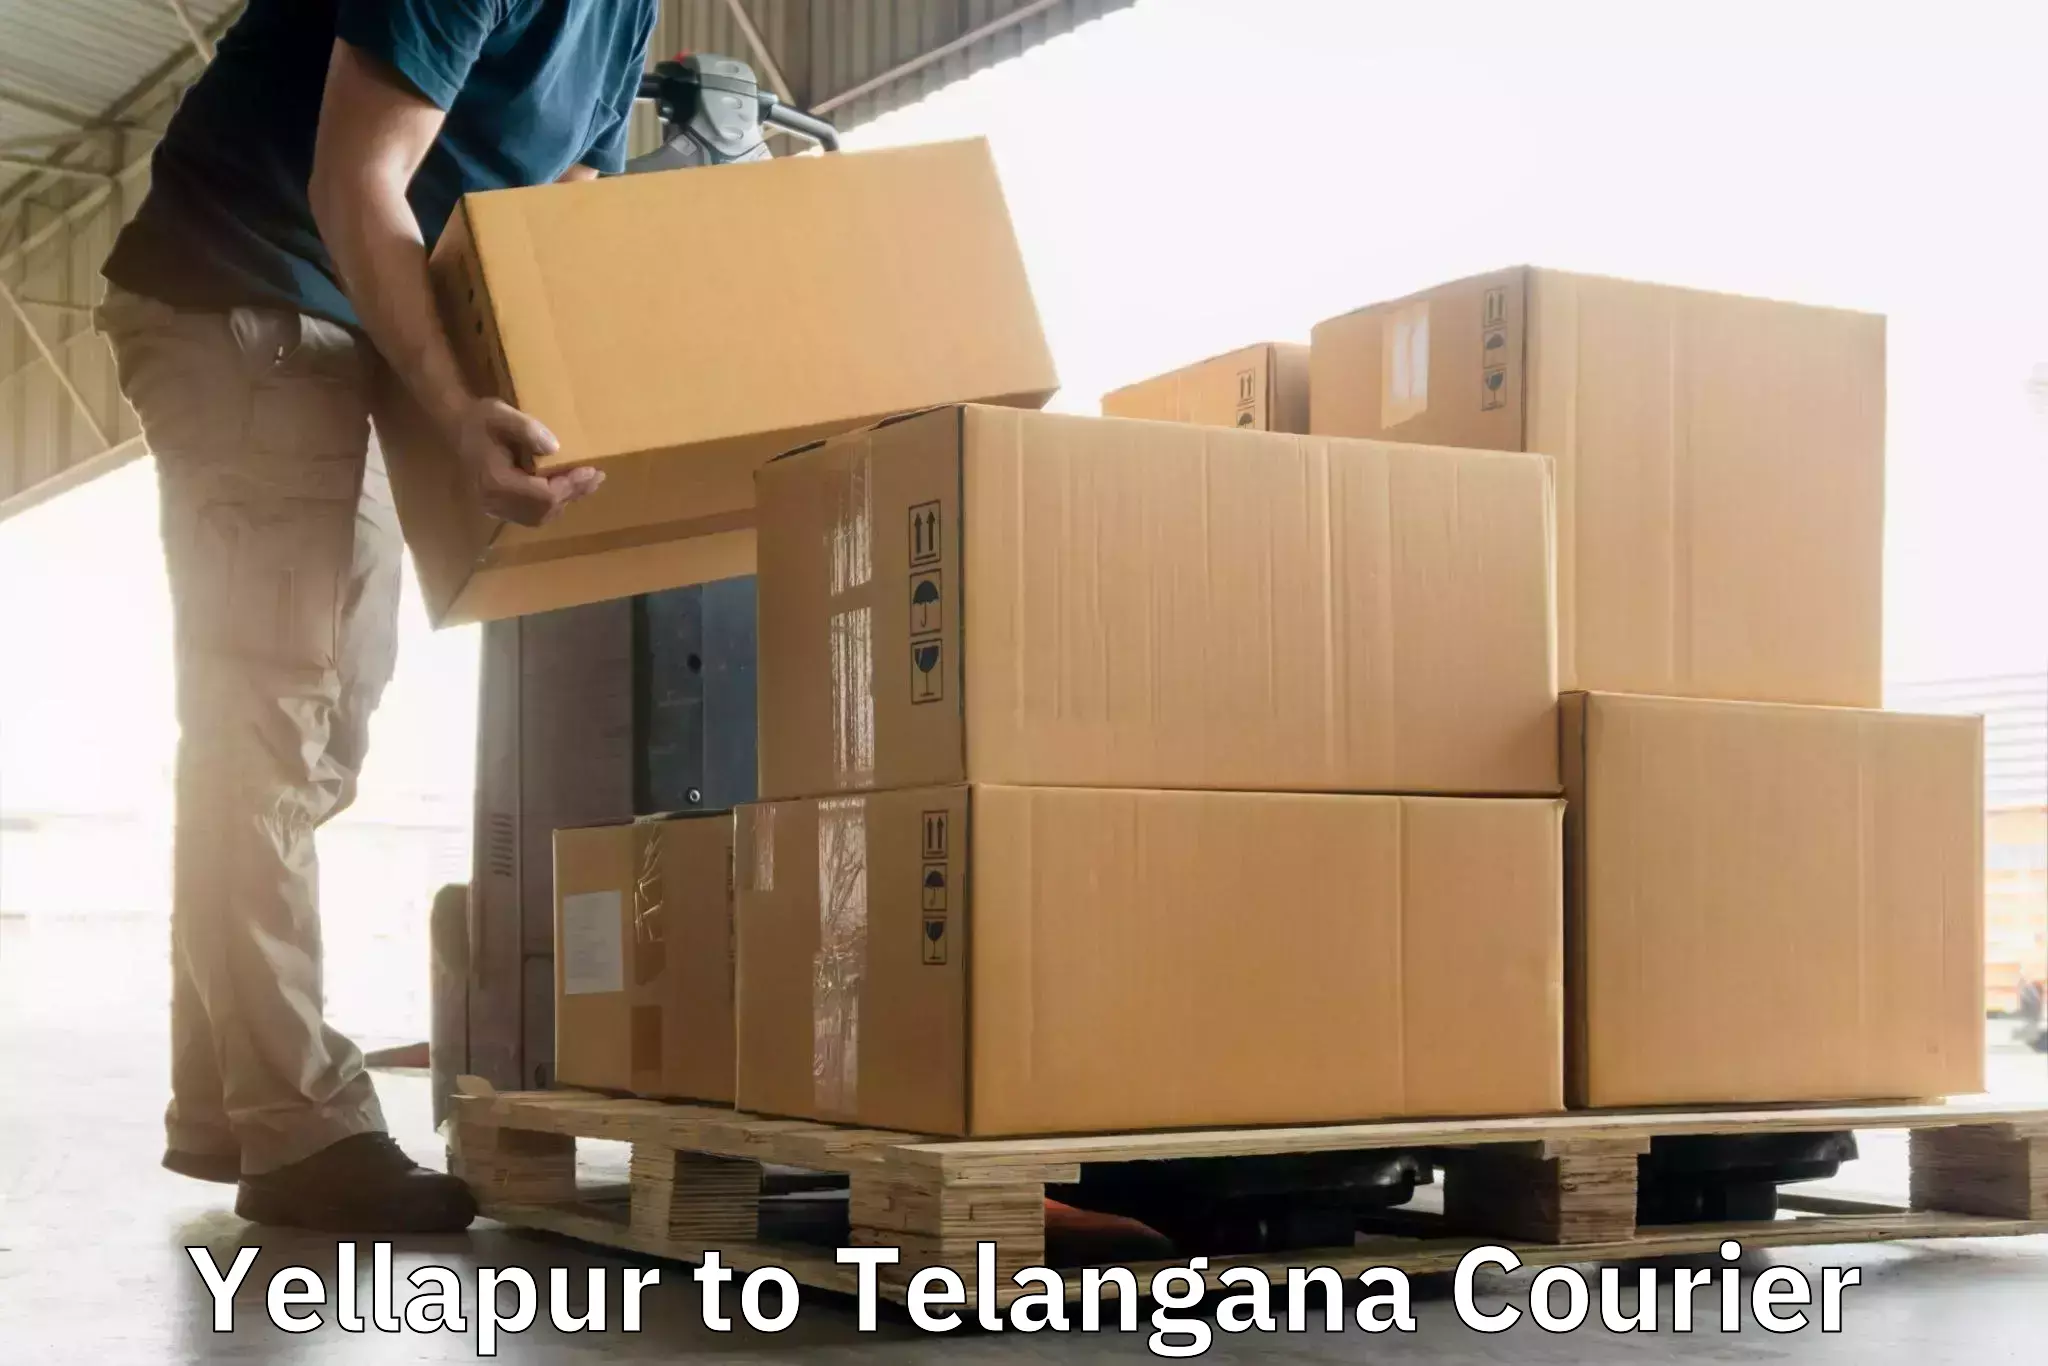 Package tracking Yellapur to Telangana